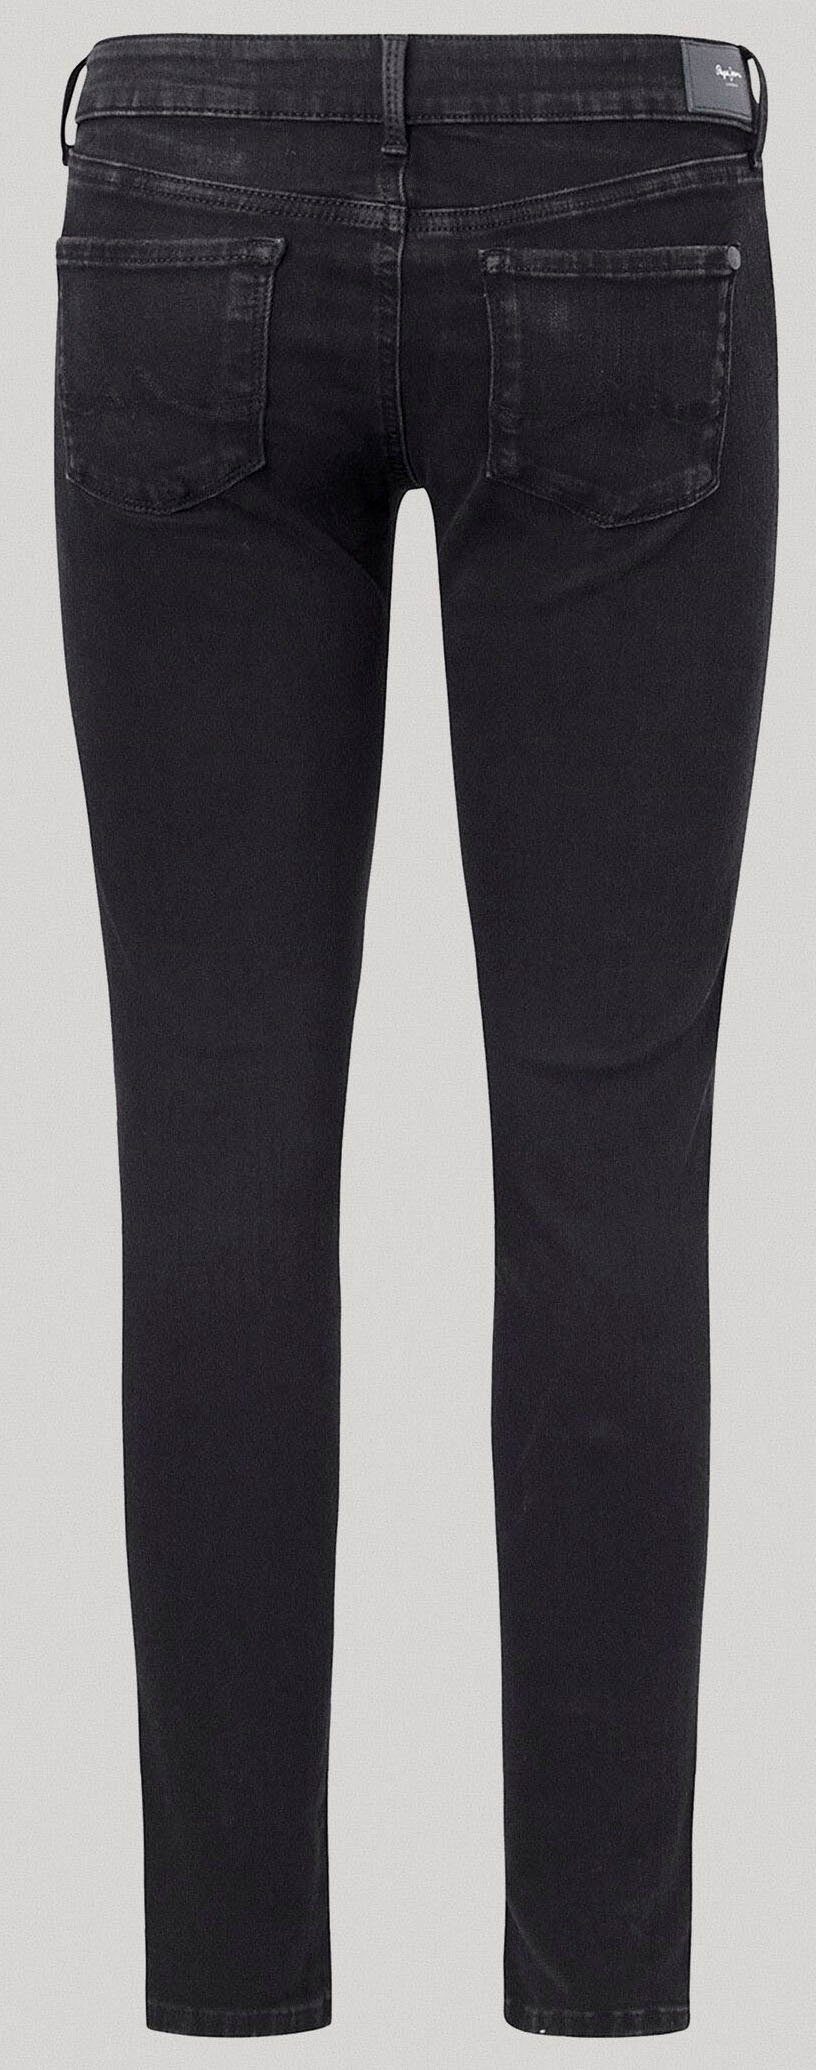 und Pepe SOHO mit 5-Pocket-Stil Stretch-Anteil black 1-Knopf Jeans im Skinny-fit-Jeans Bund